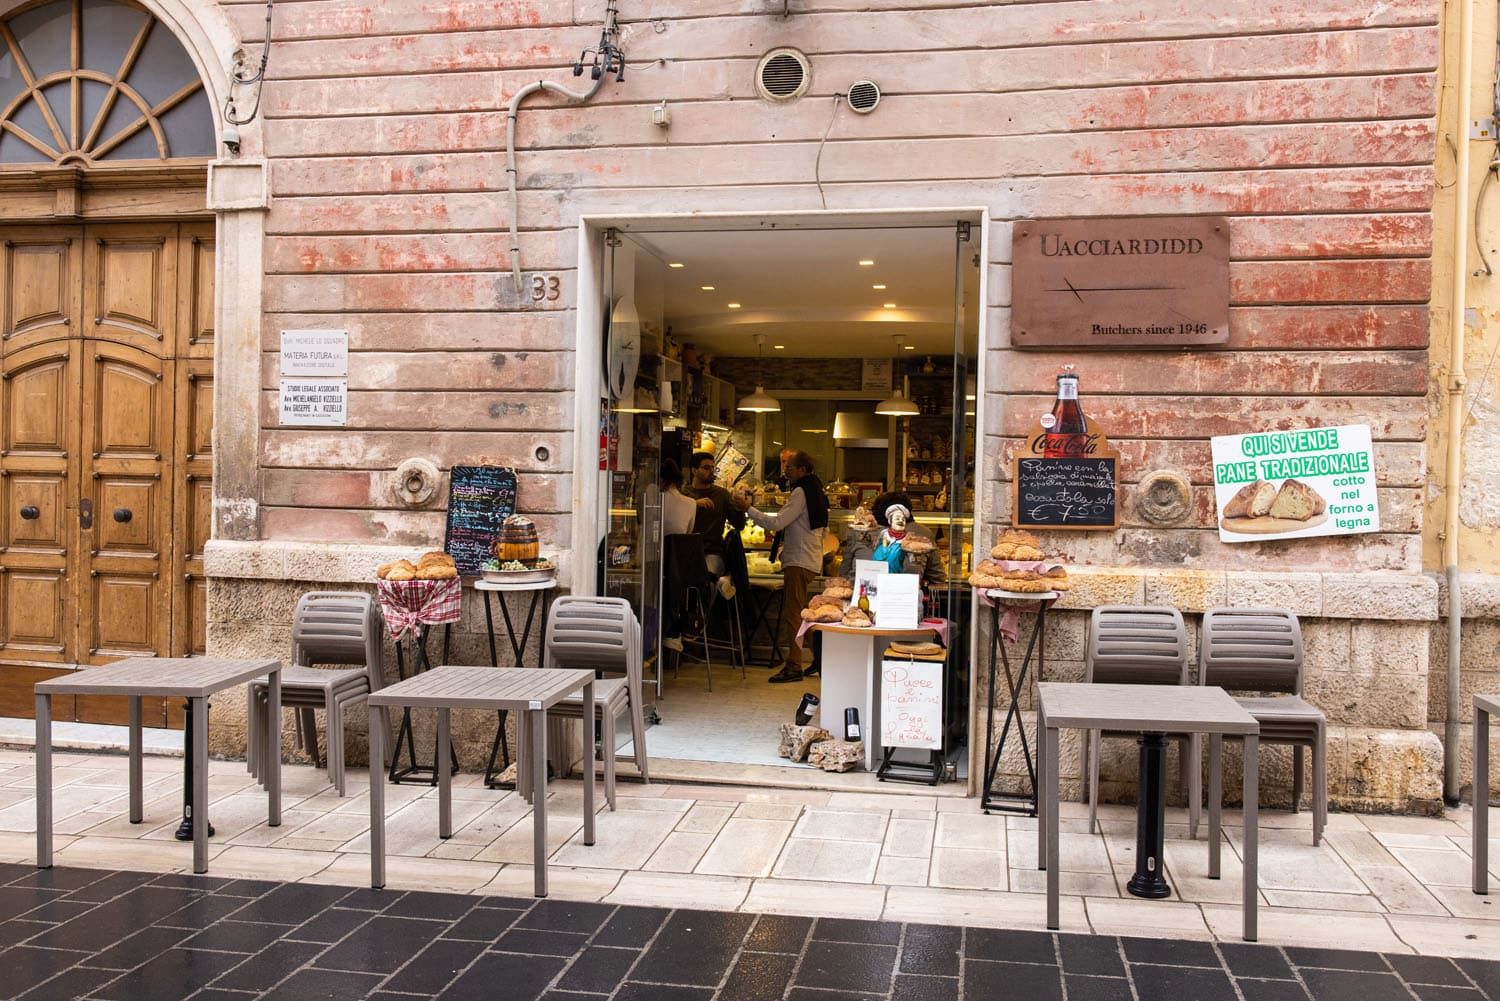 Uacciardidd Matera | Where to eat in Matera